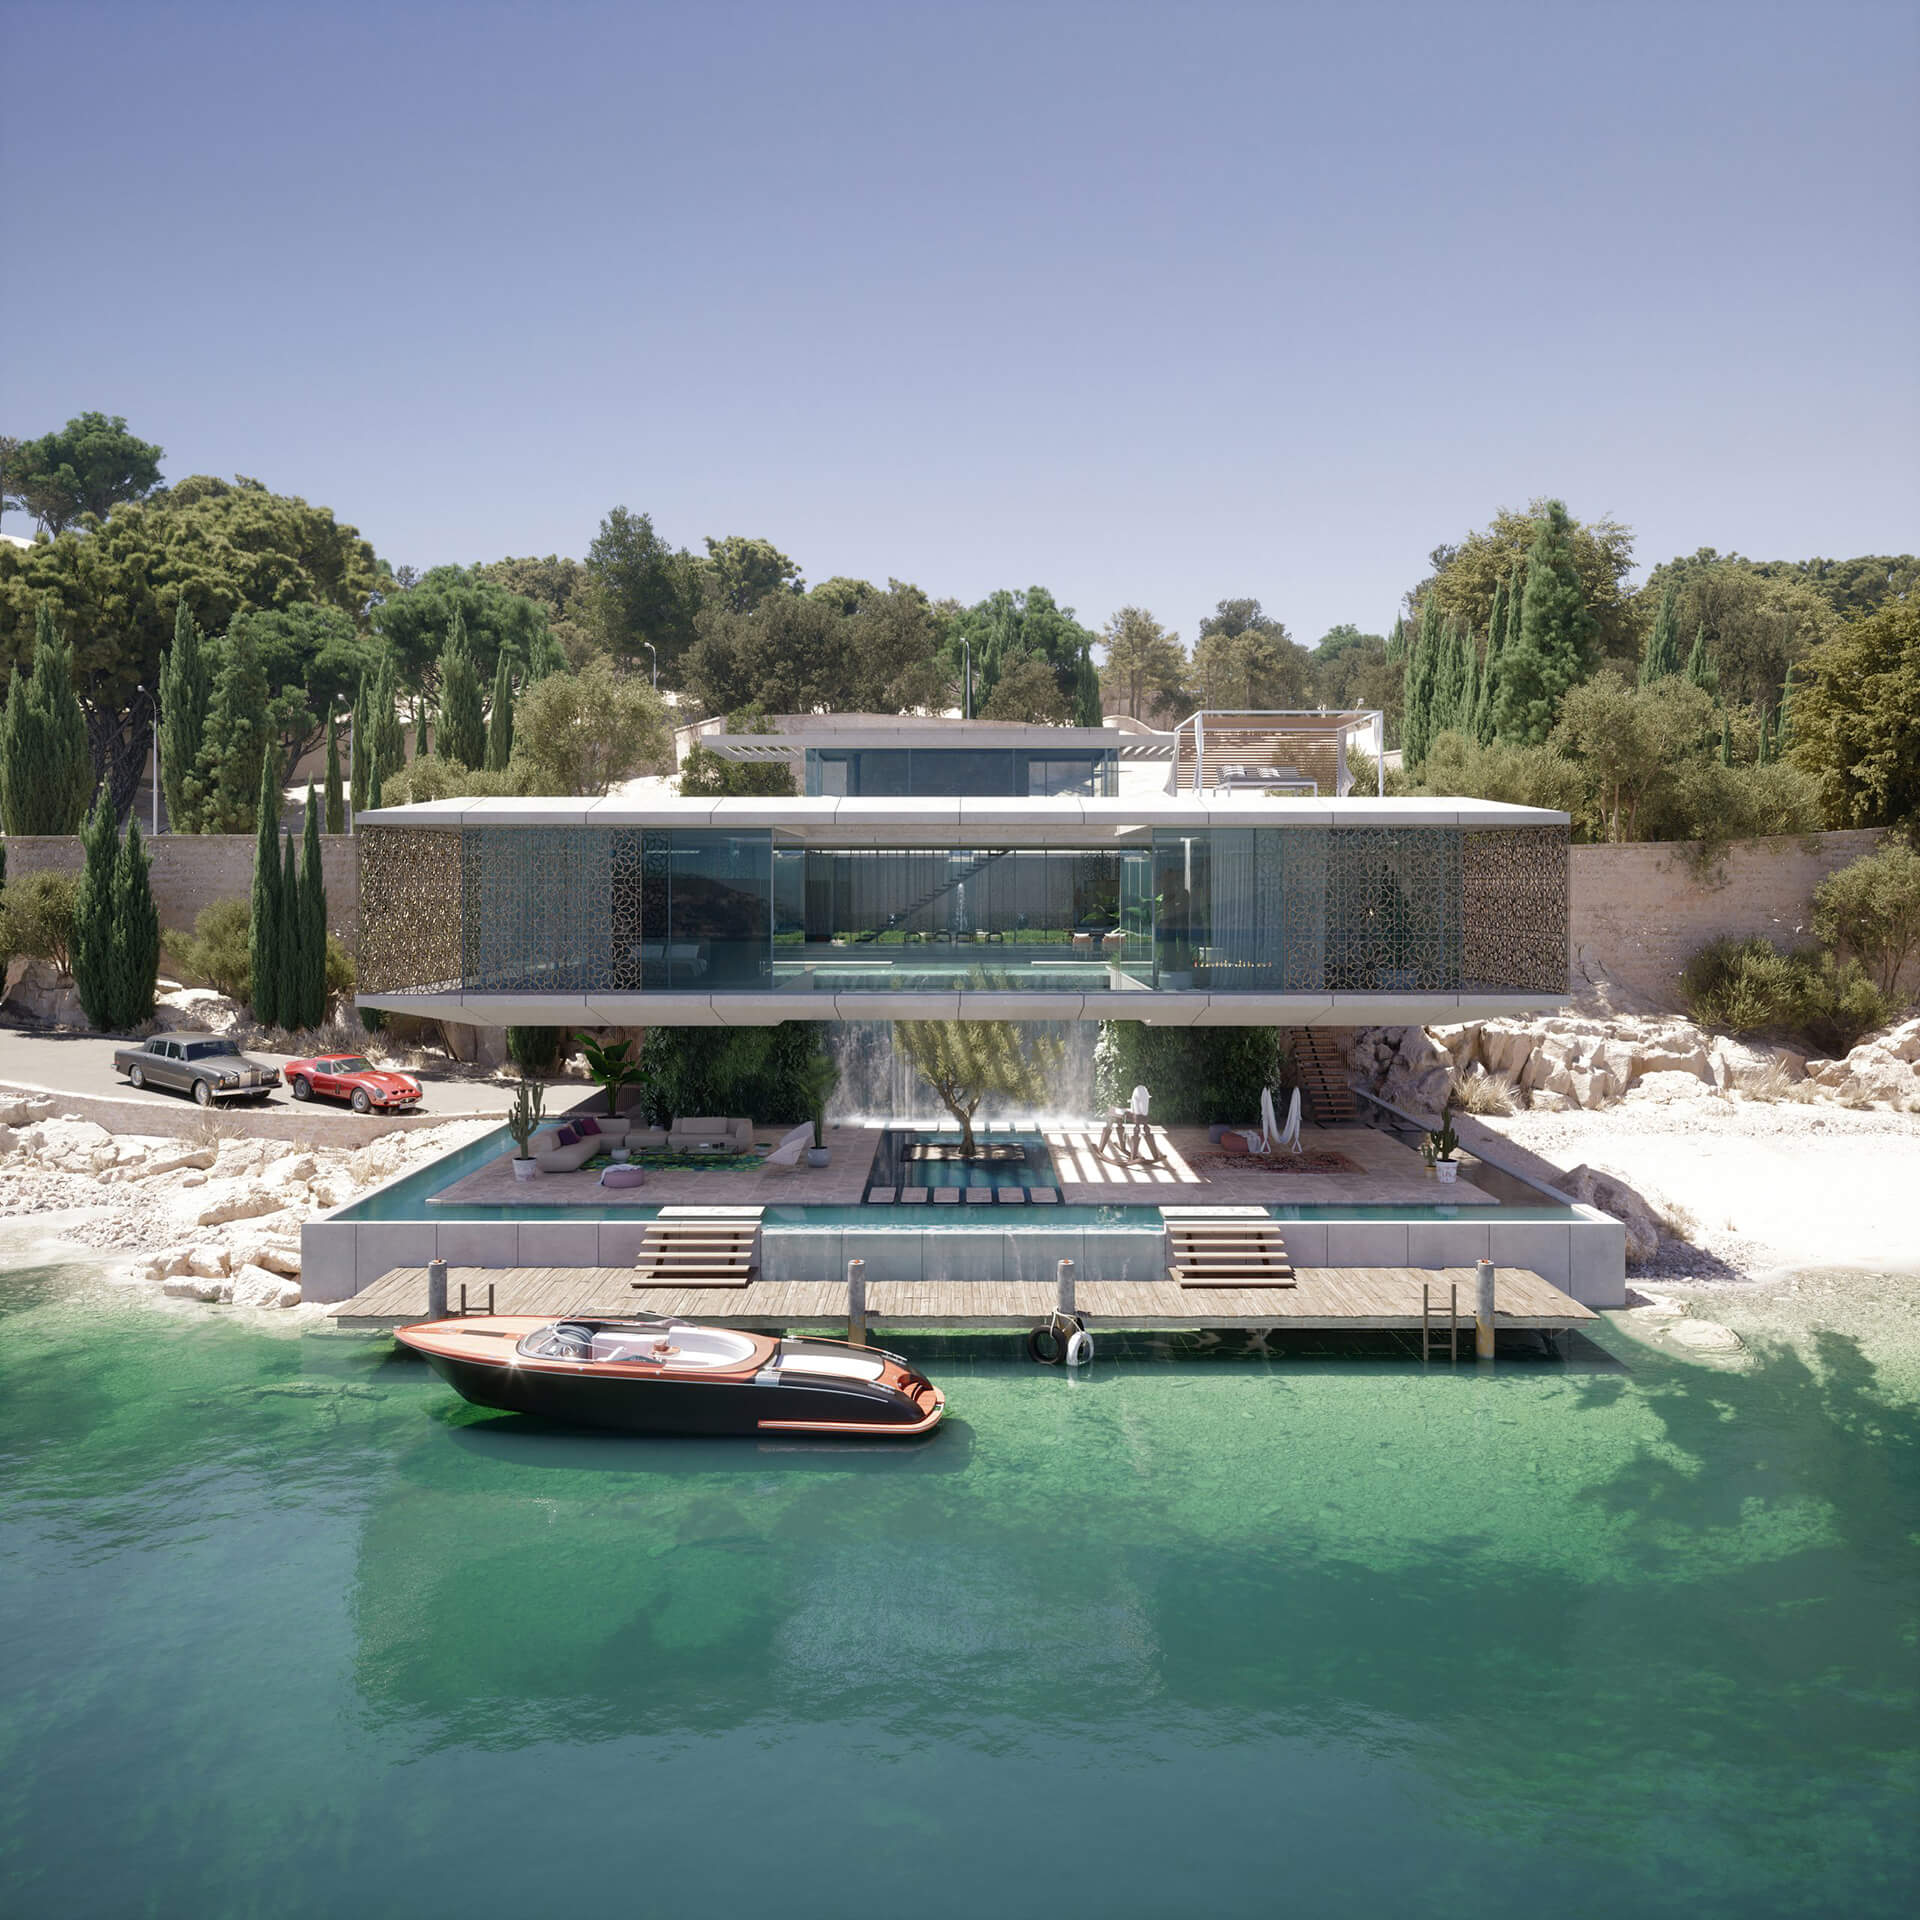 Best Renderings: a Luxurious Seaside Residence Visualized in 3D